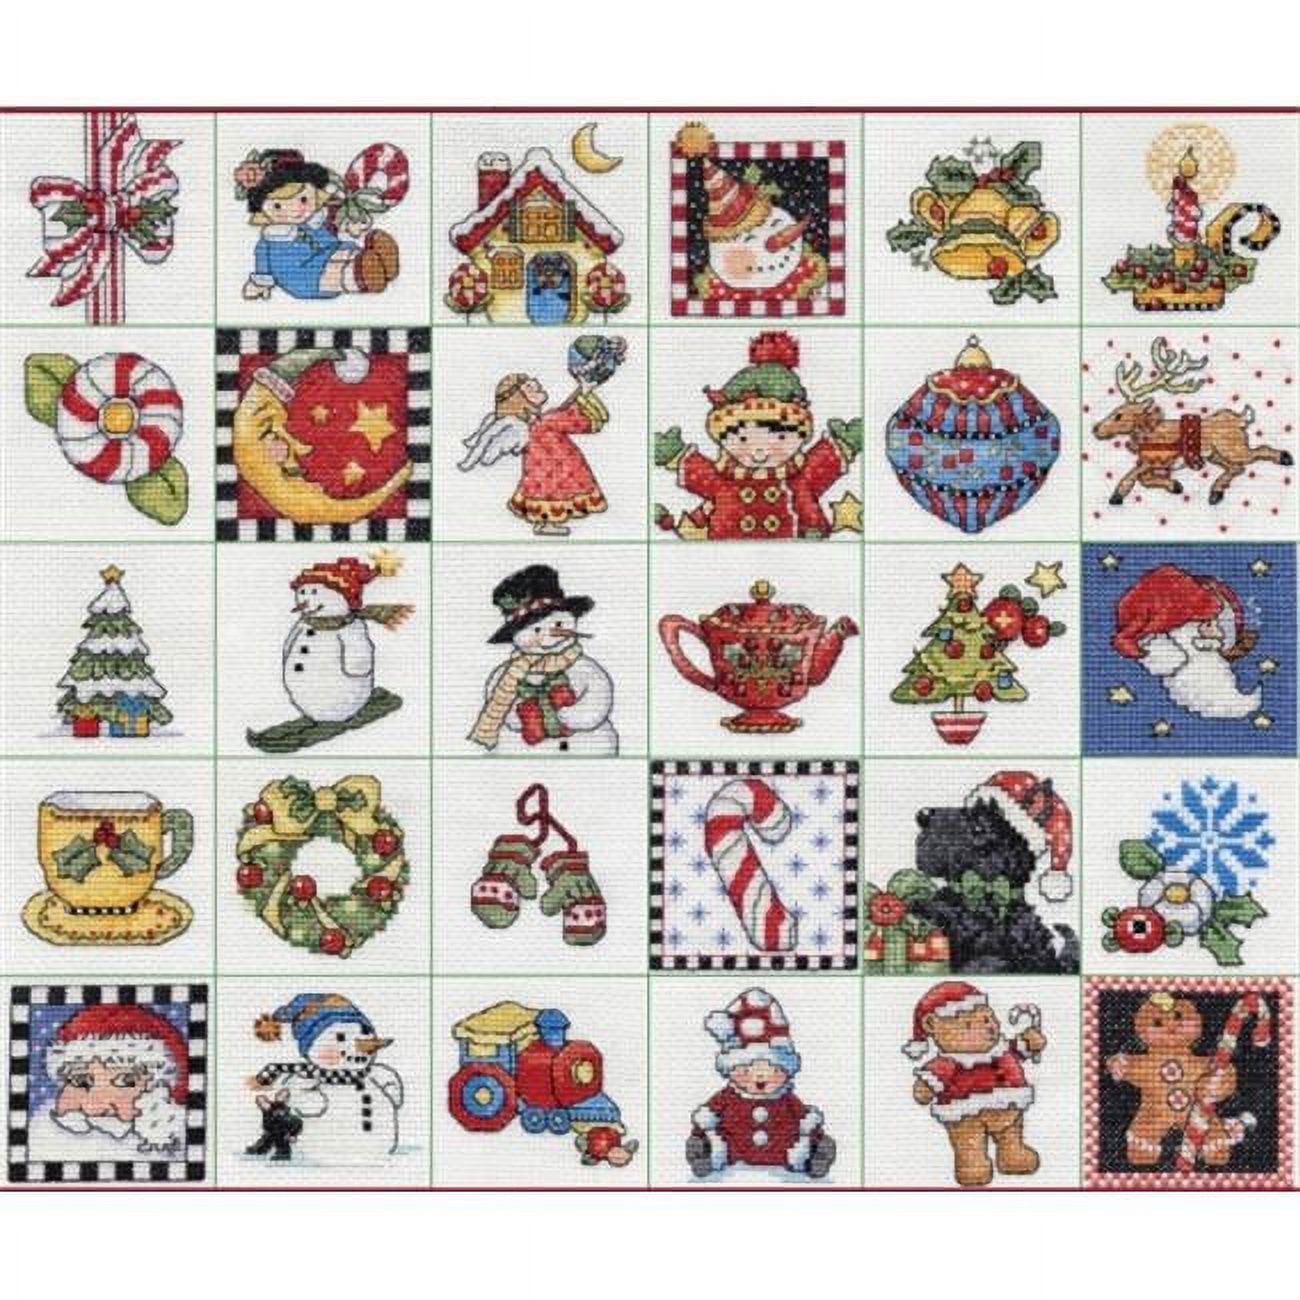 Bucilla 86138 Mary Engelbreit Ornaments Counted Cross Stitch Kit-2&apos;&apos;X2&apos;&apos; 14 Count Set Of 30 - image 1 of 2